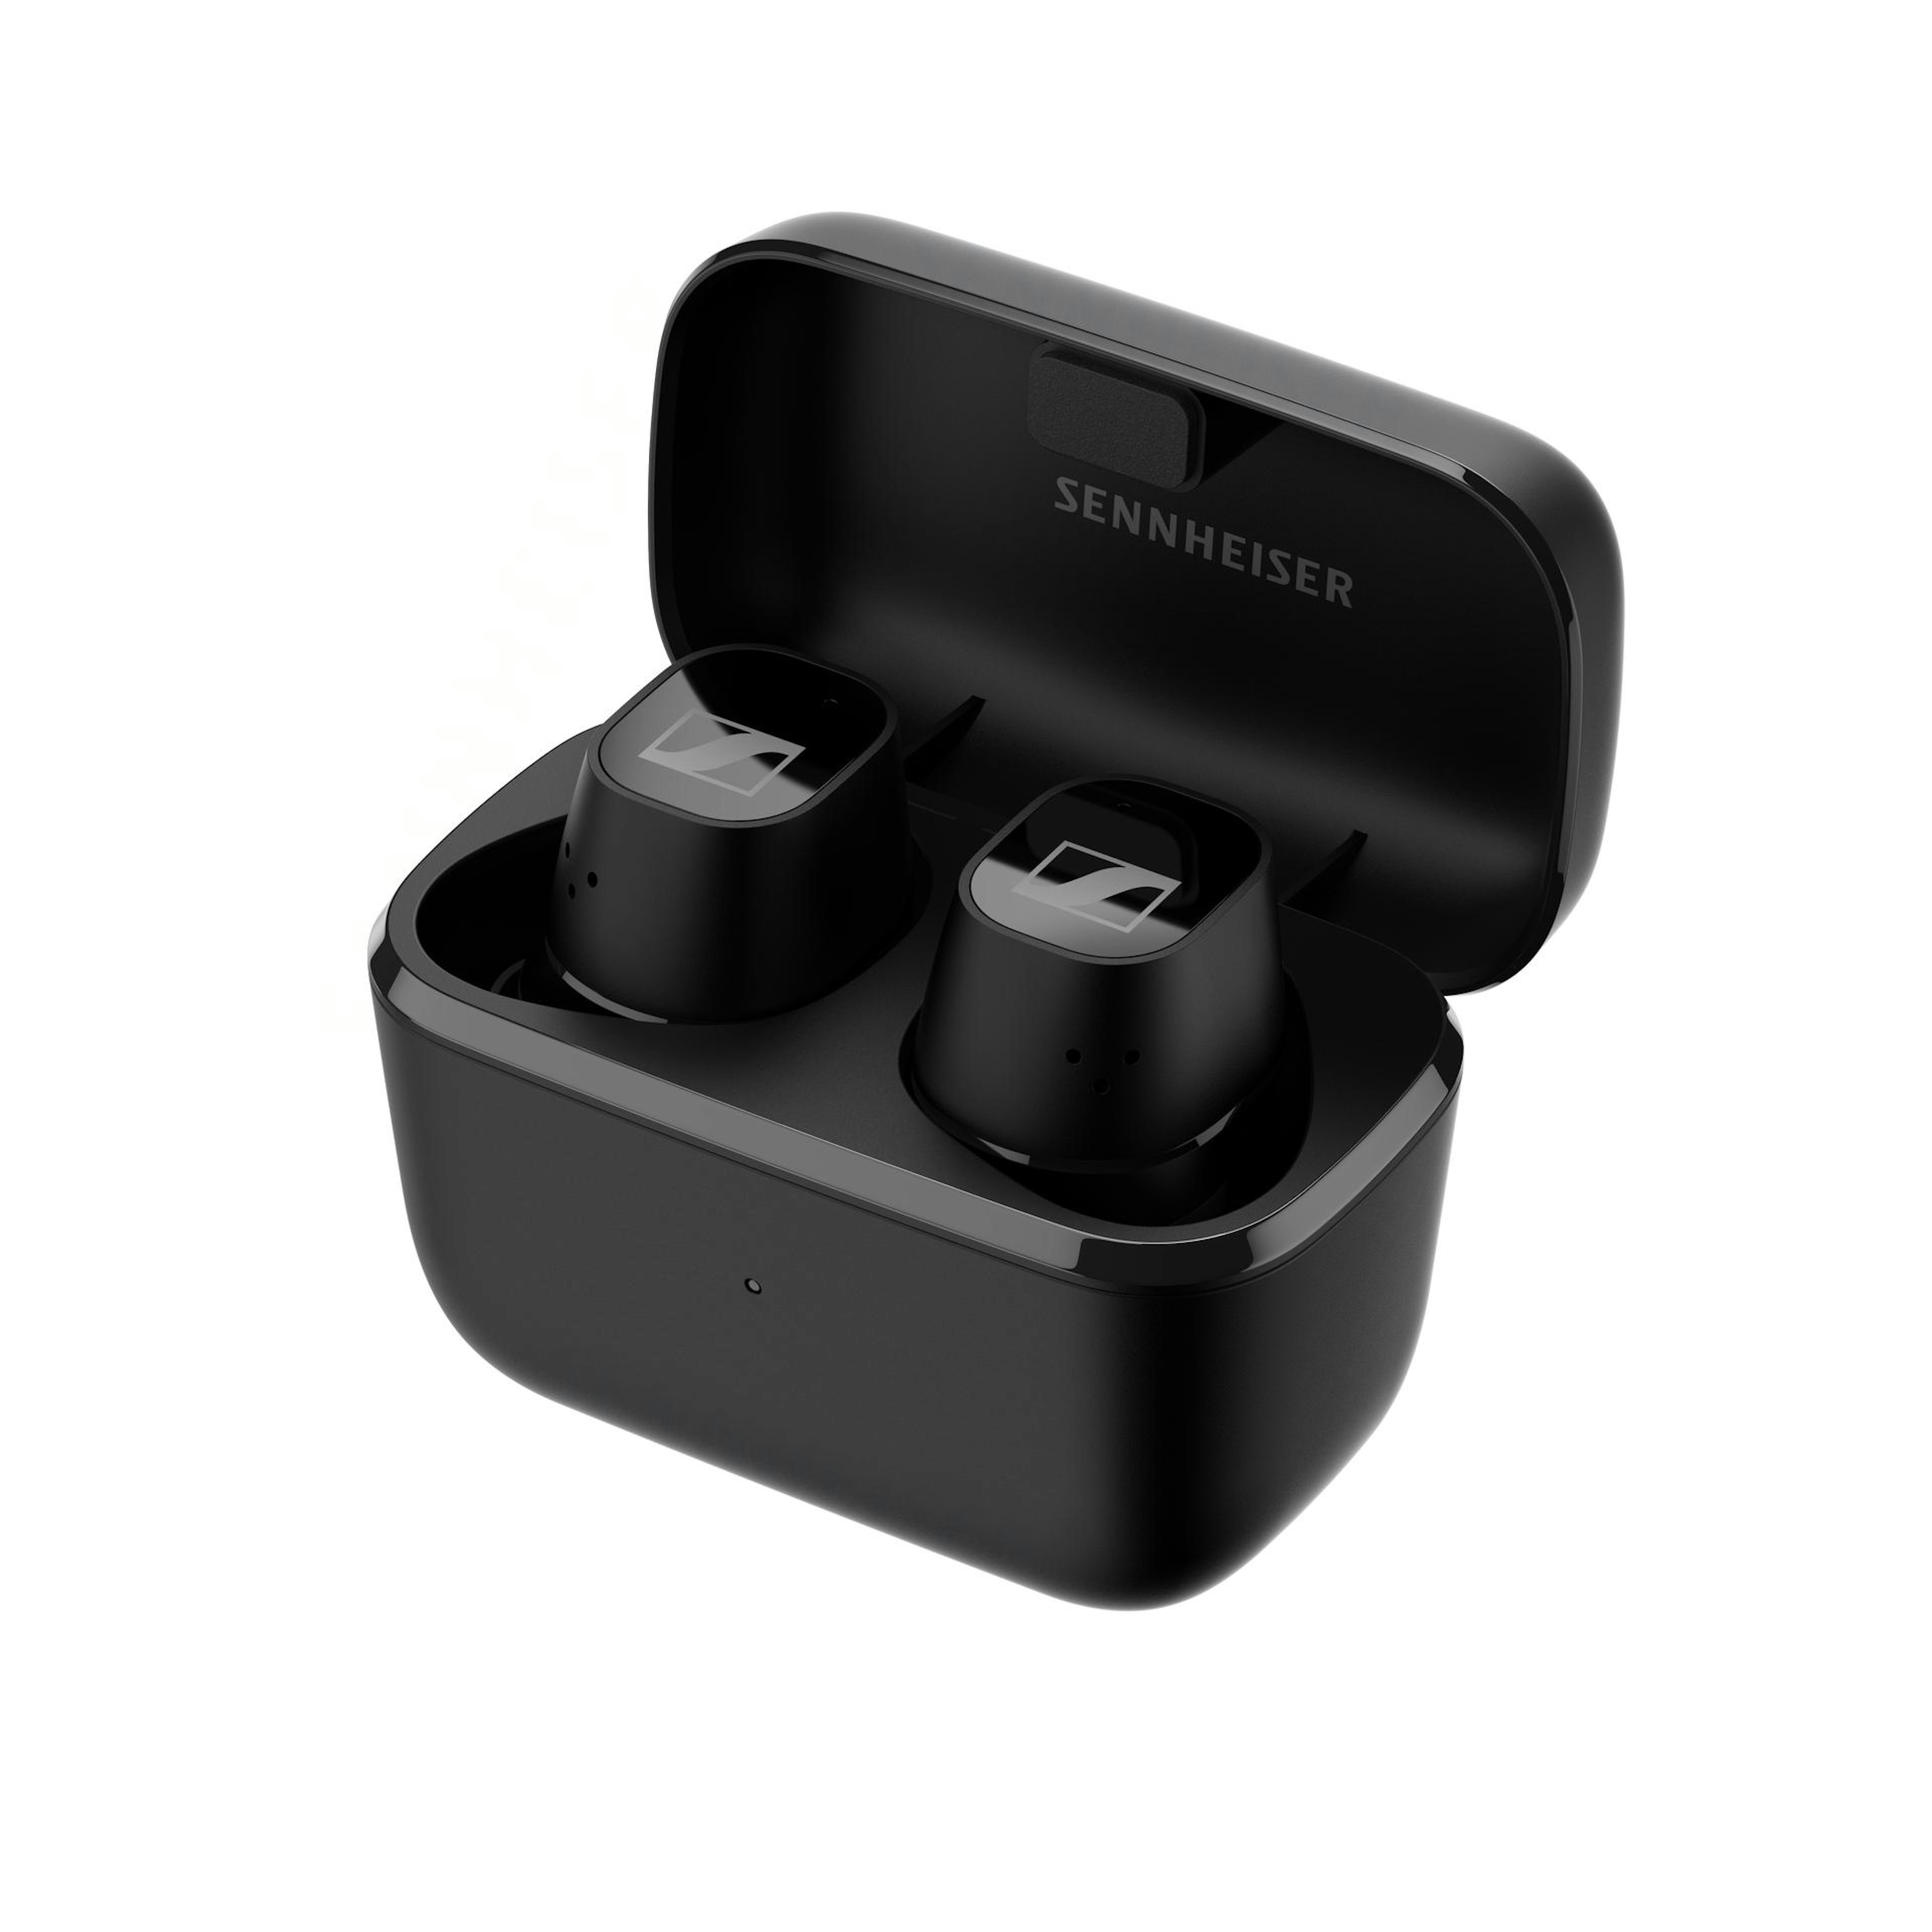  CX Plus True Wireless Sennheiser Earbuds in black charging case